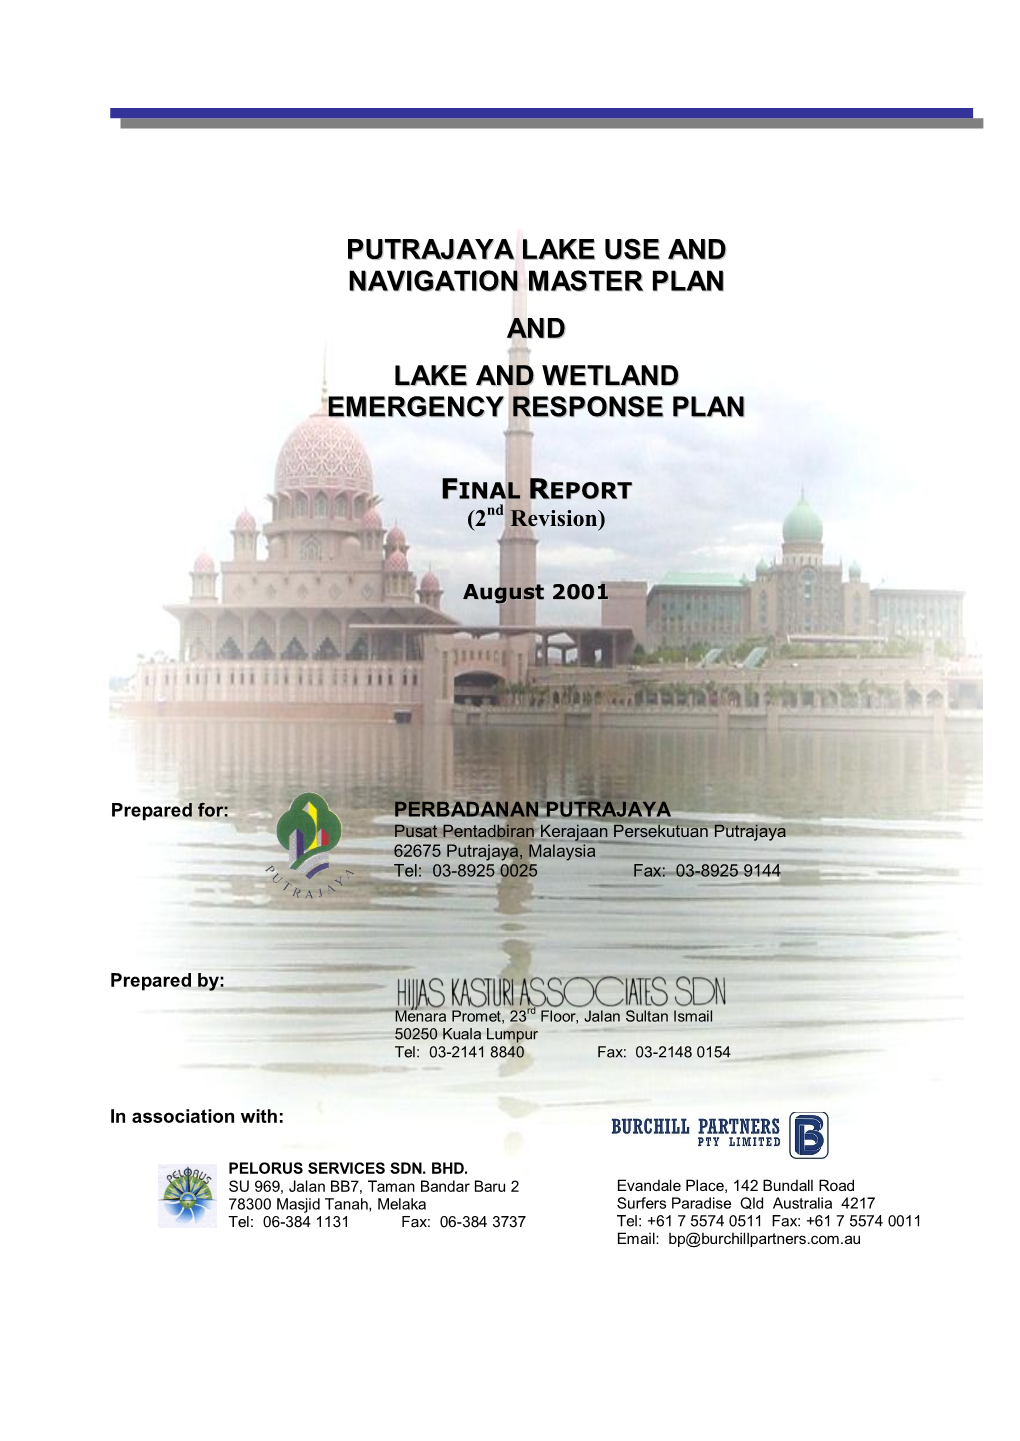 Putrajaya Lake Use and Navigation Master Plan and Lake and Wetland Emergency Response Plan